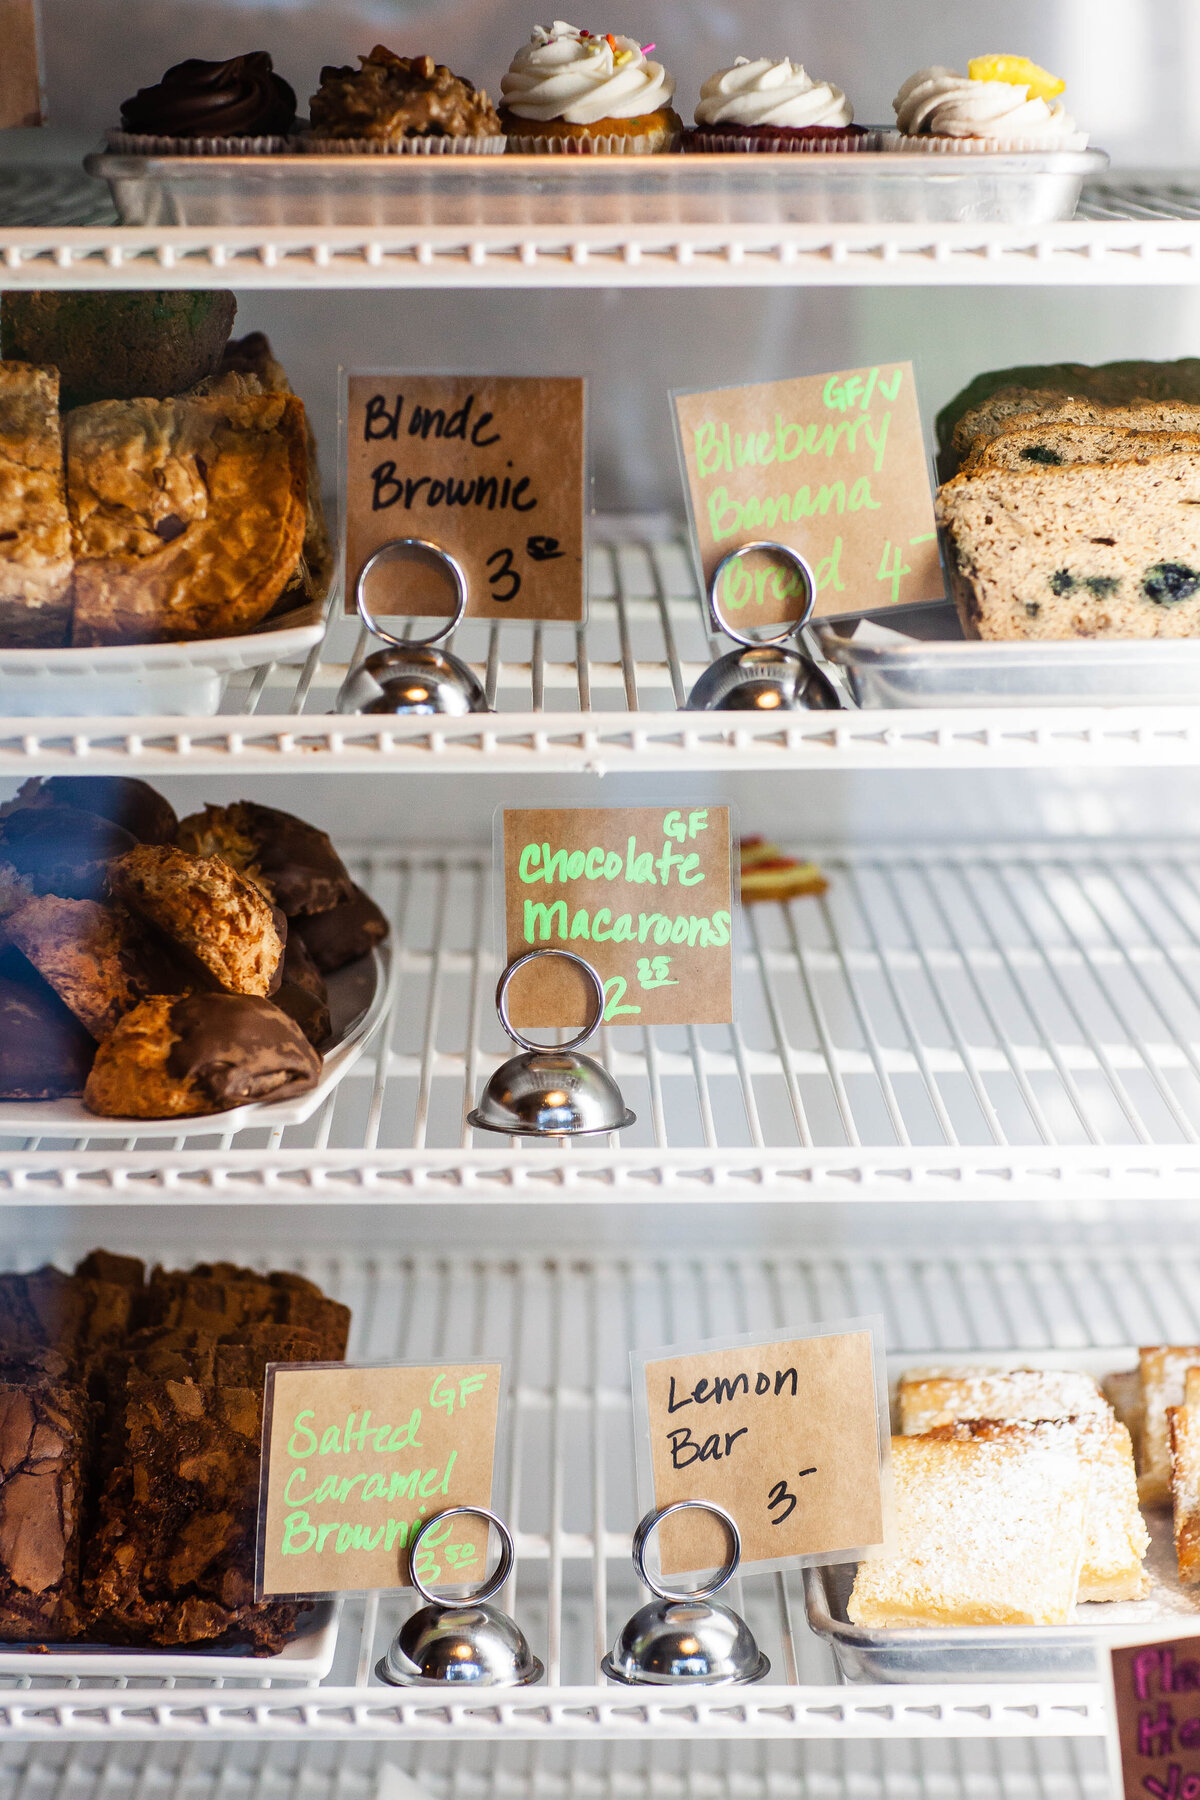 sugar-pine-cakery-baked-goods-refrigerator-tahoe-city